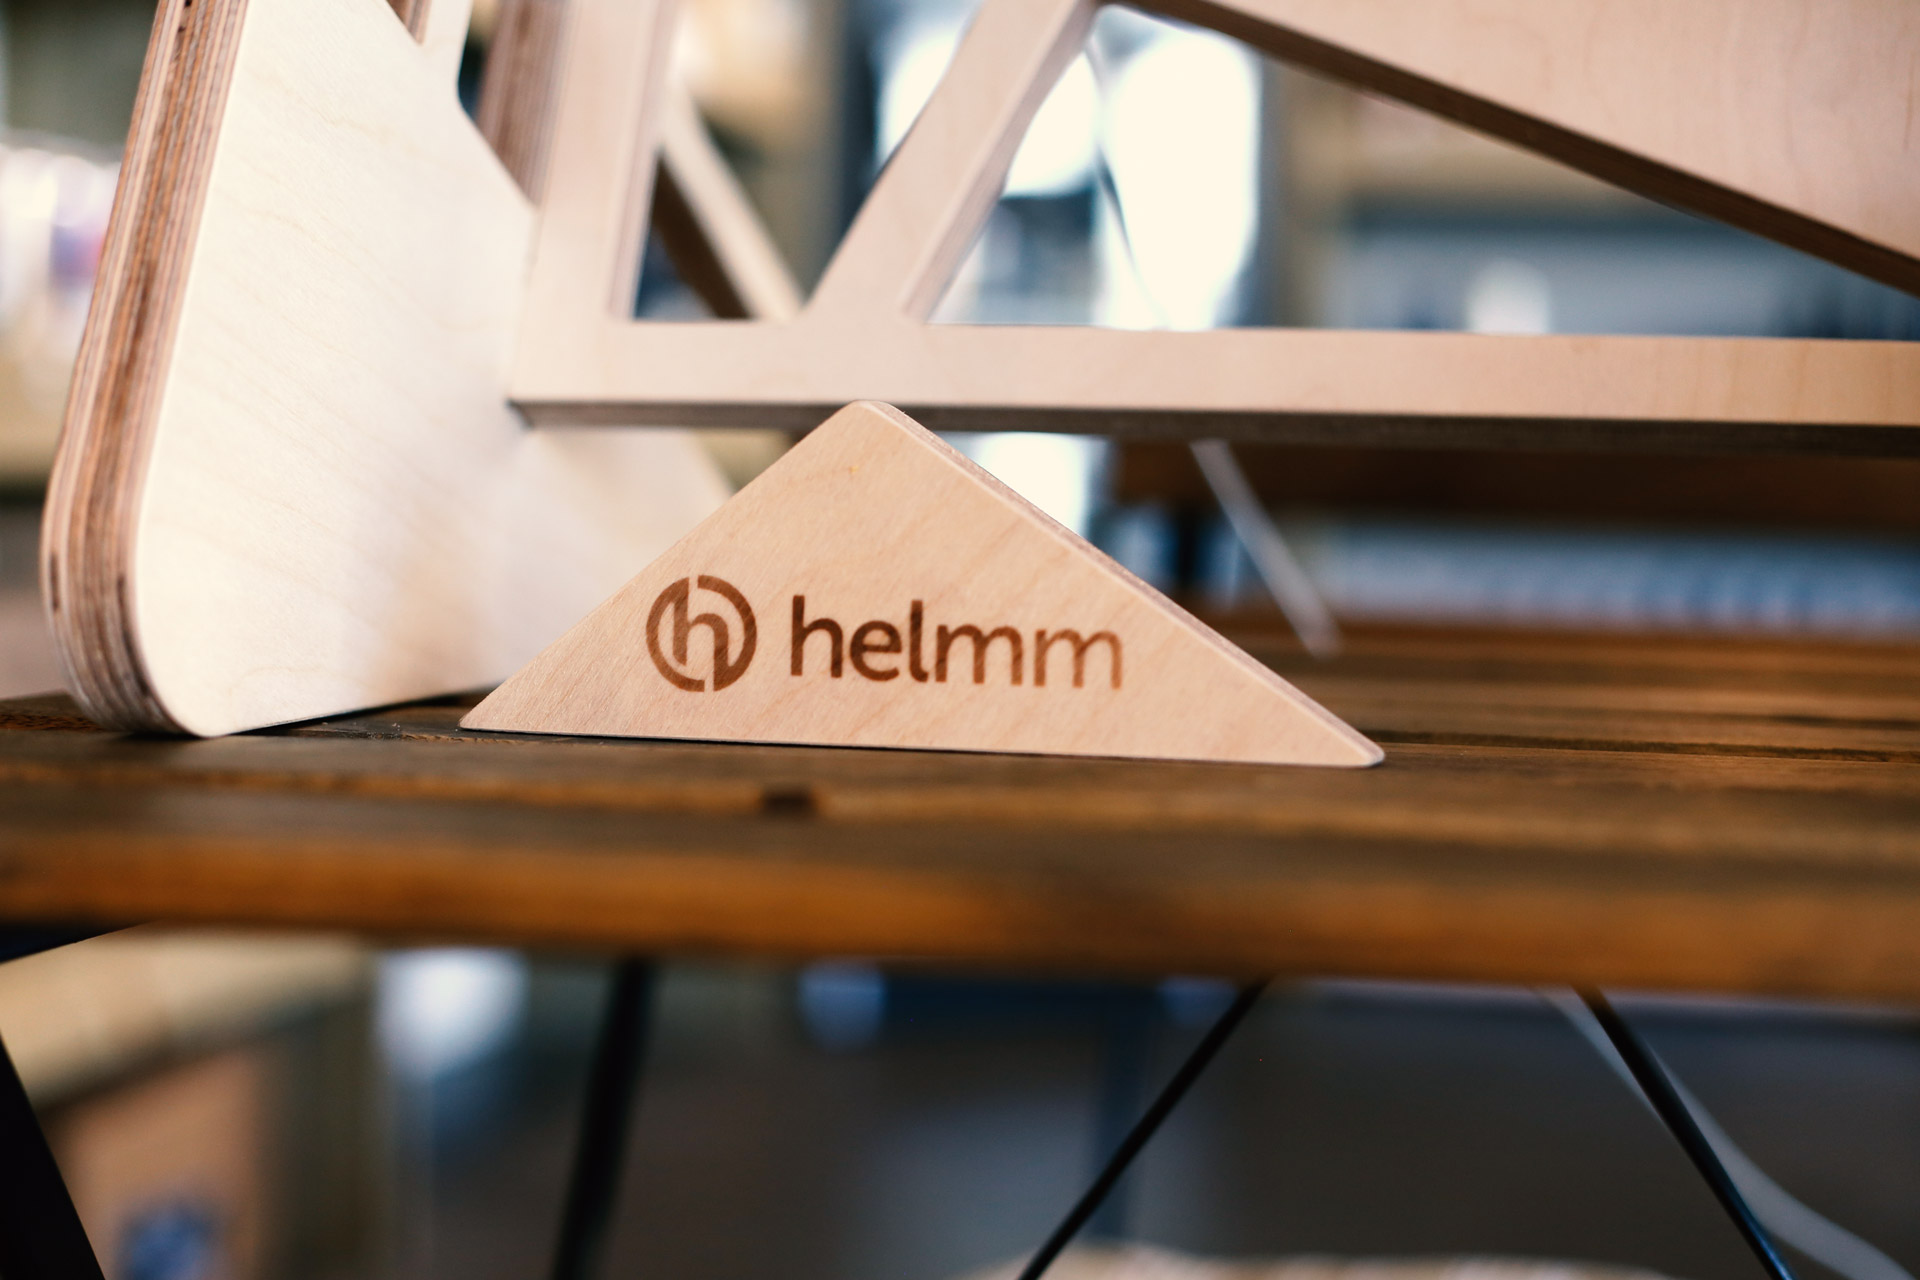 Helmm logo branded onto plywood desk accessory